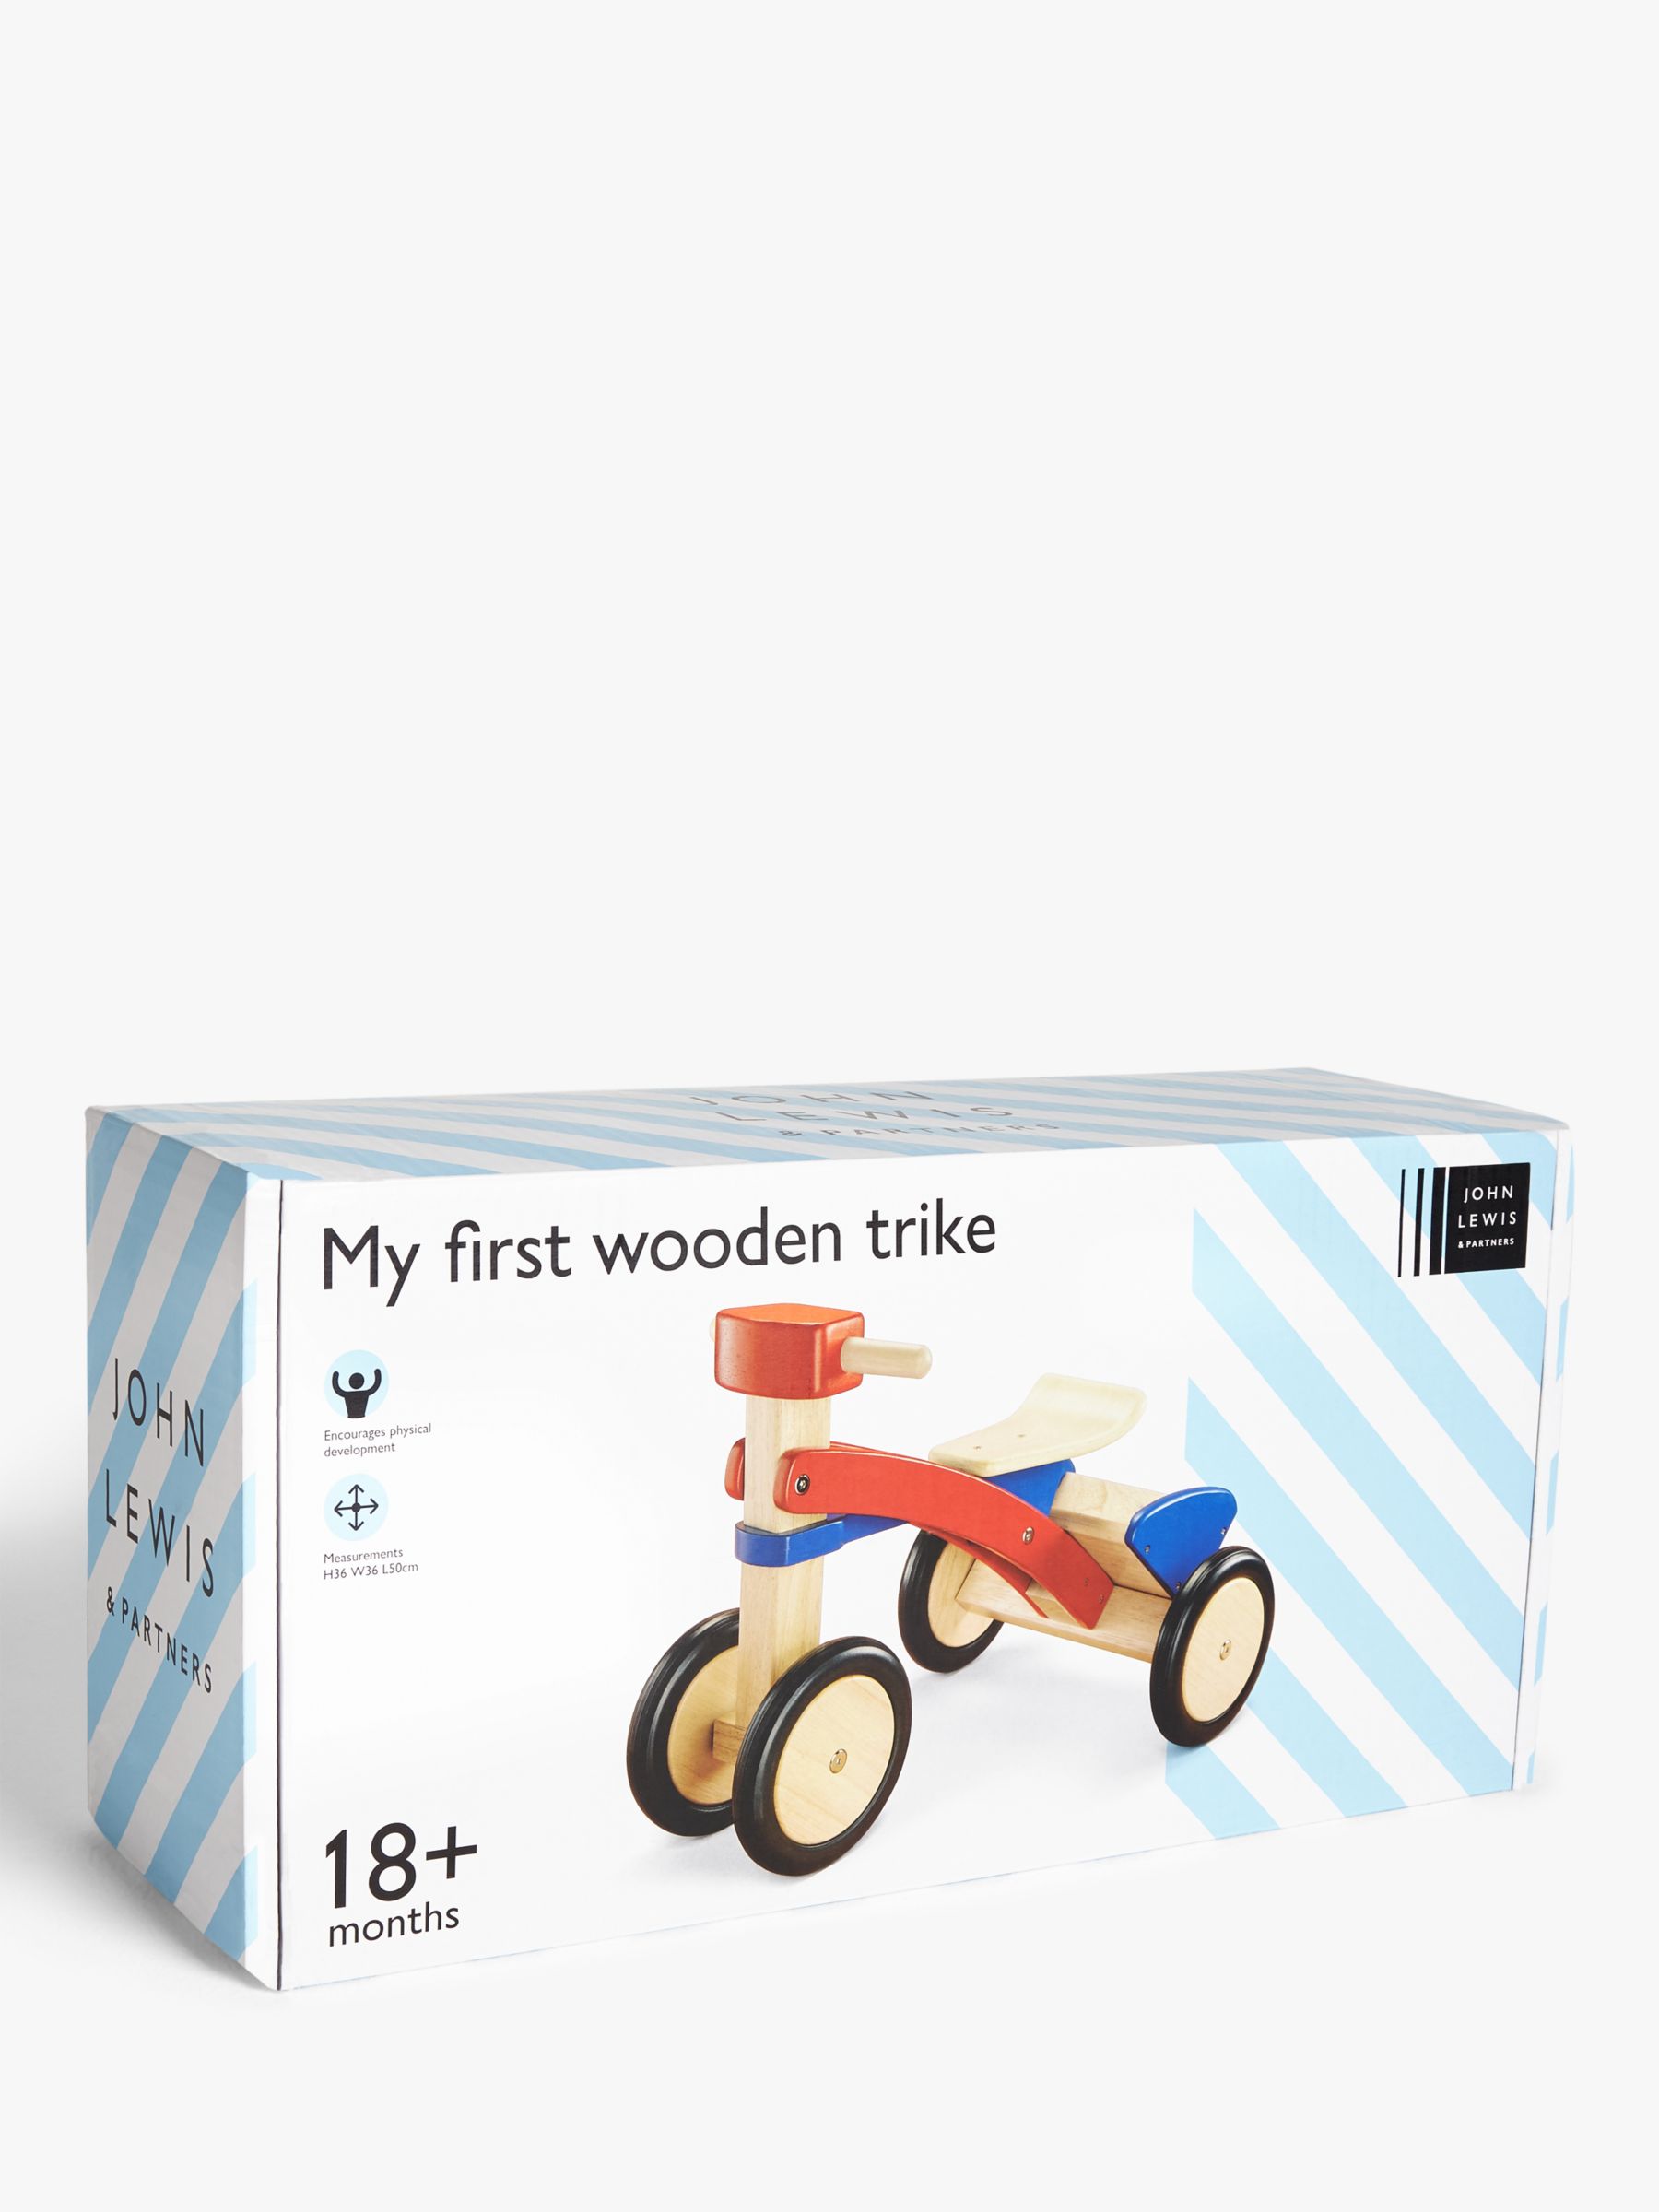 john lewis wooden toys